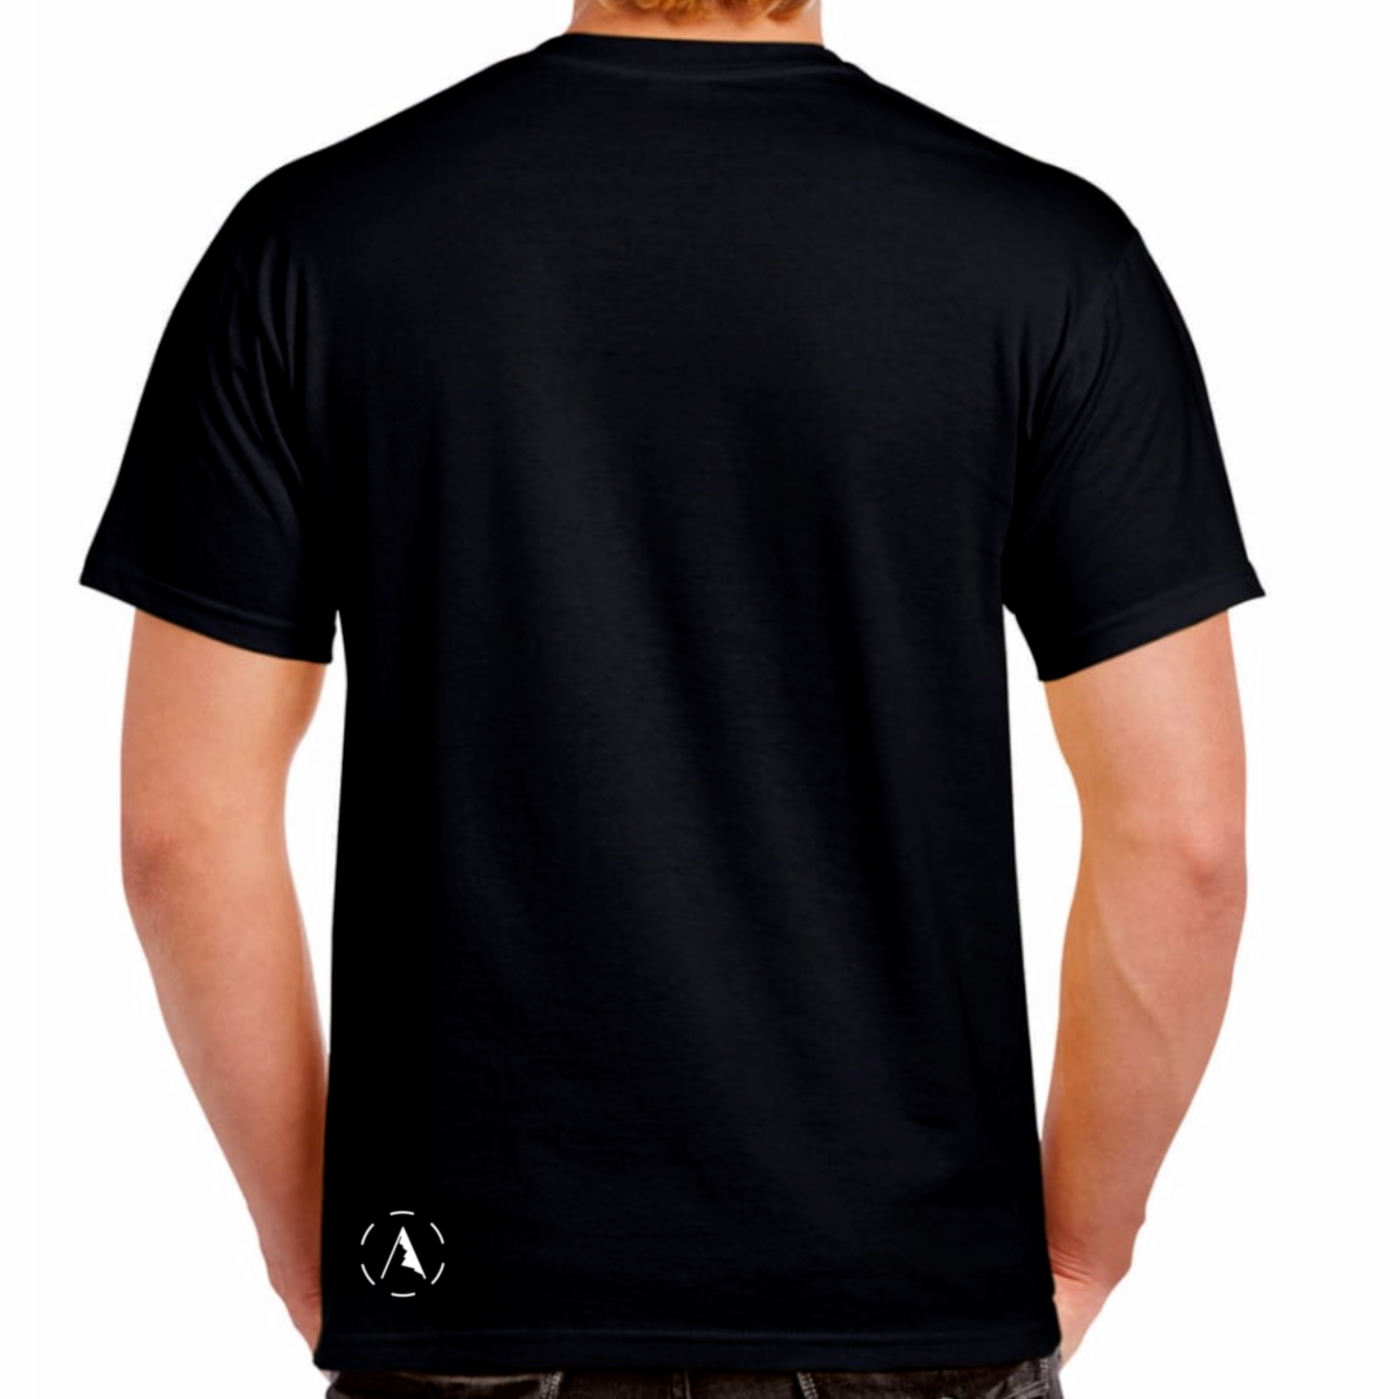 SS23 T-shirt - SLED